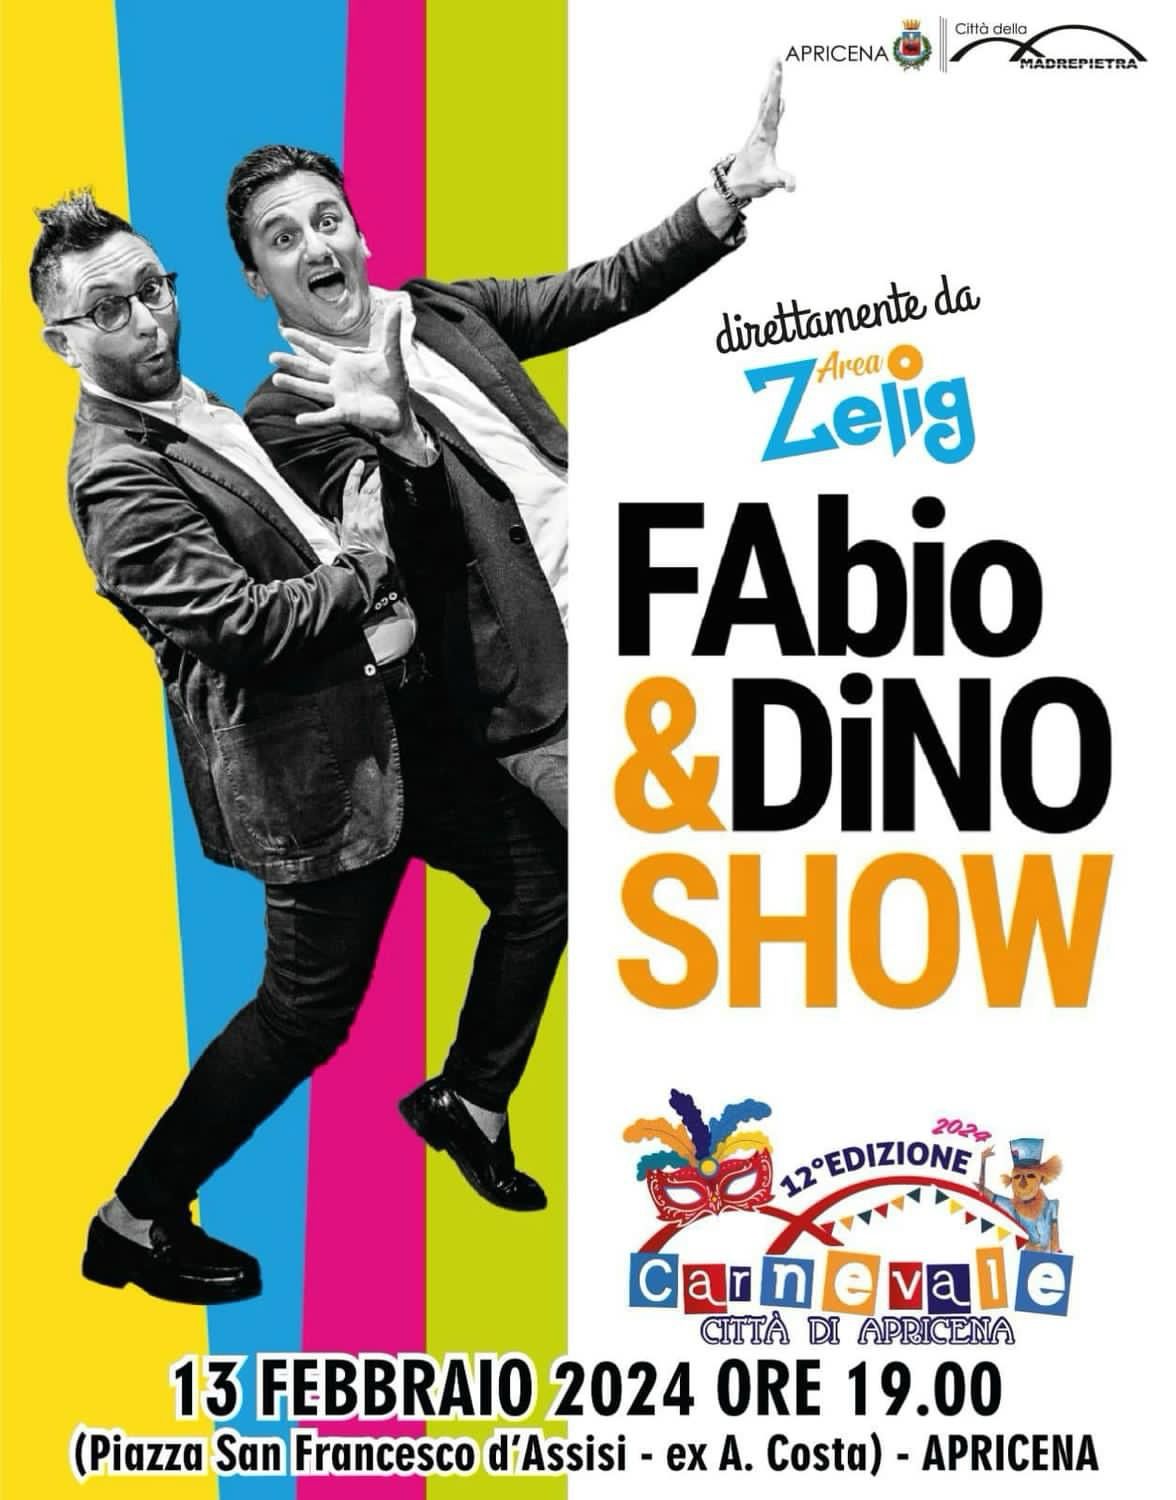 Carnevale Apricena 2024 Fabio & Dino Show